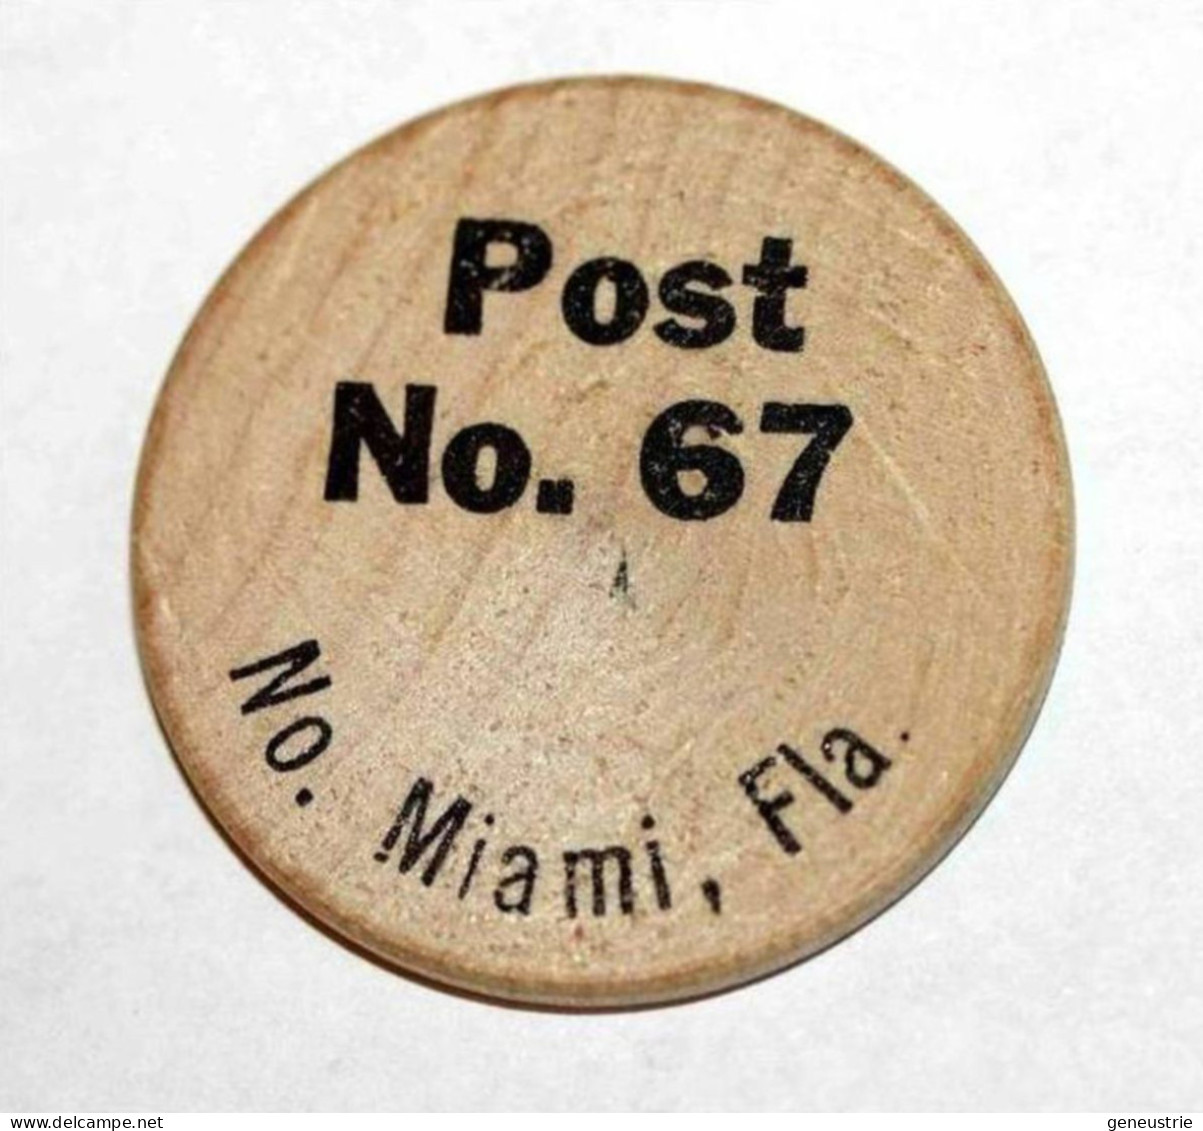 Wooden Token - Wooden Nickel - Jeton Bois Bison Monnaie Nécessité - Miami Floride - Etats-Unis - Notgeld